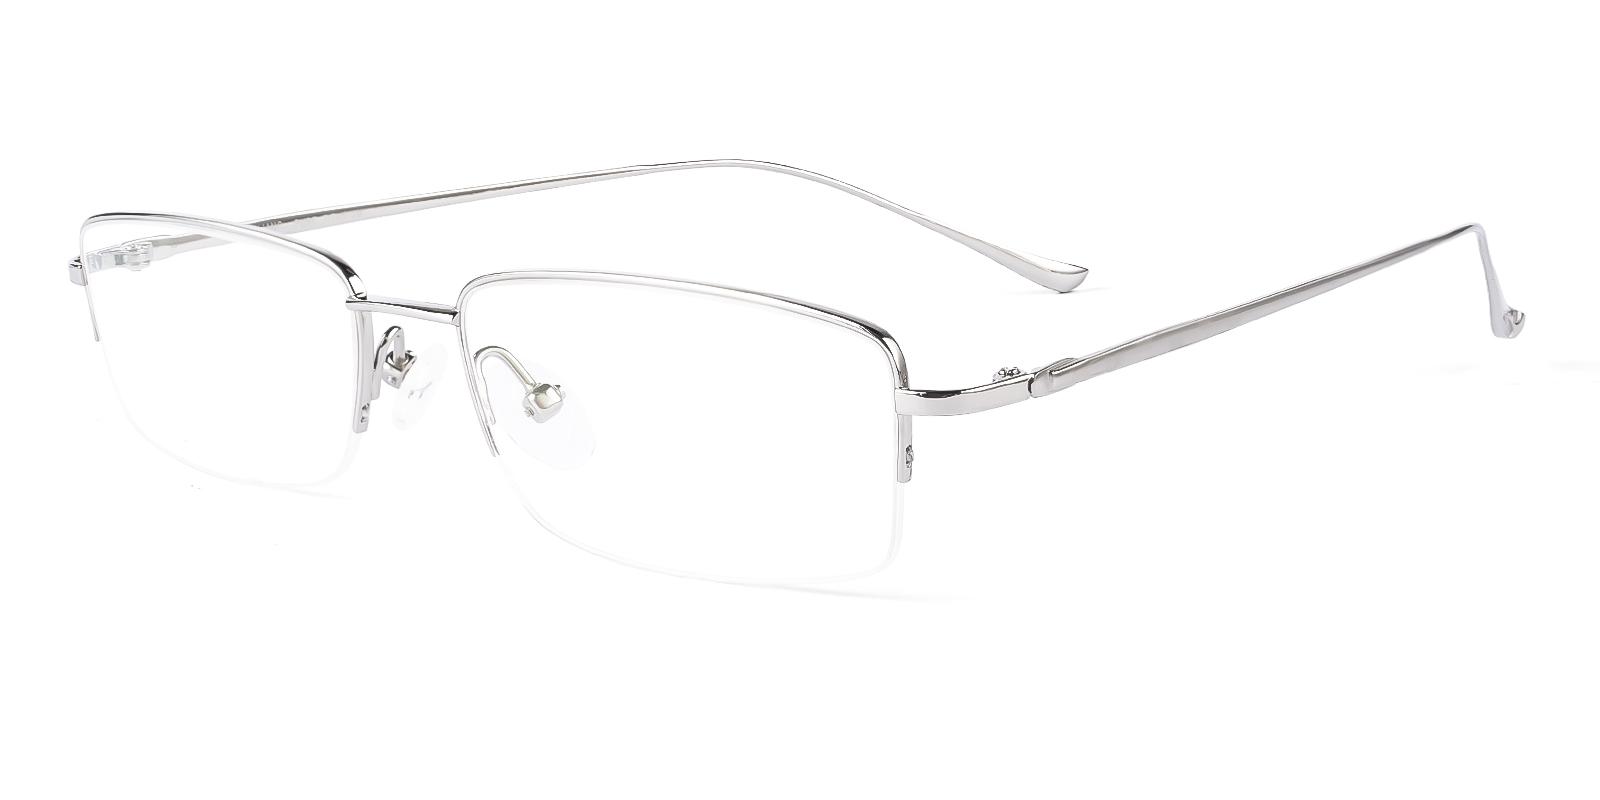 Lessry Silver Titanium Eyeglasses , NosePads Frames from ABBE Glasses